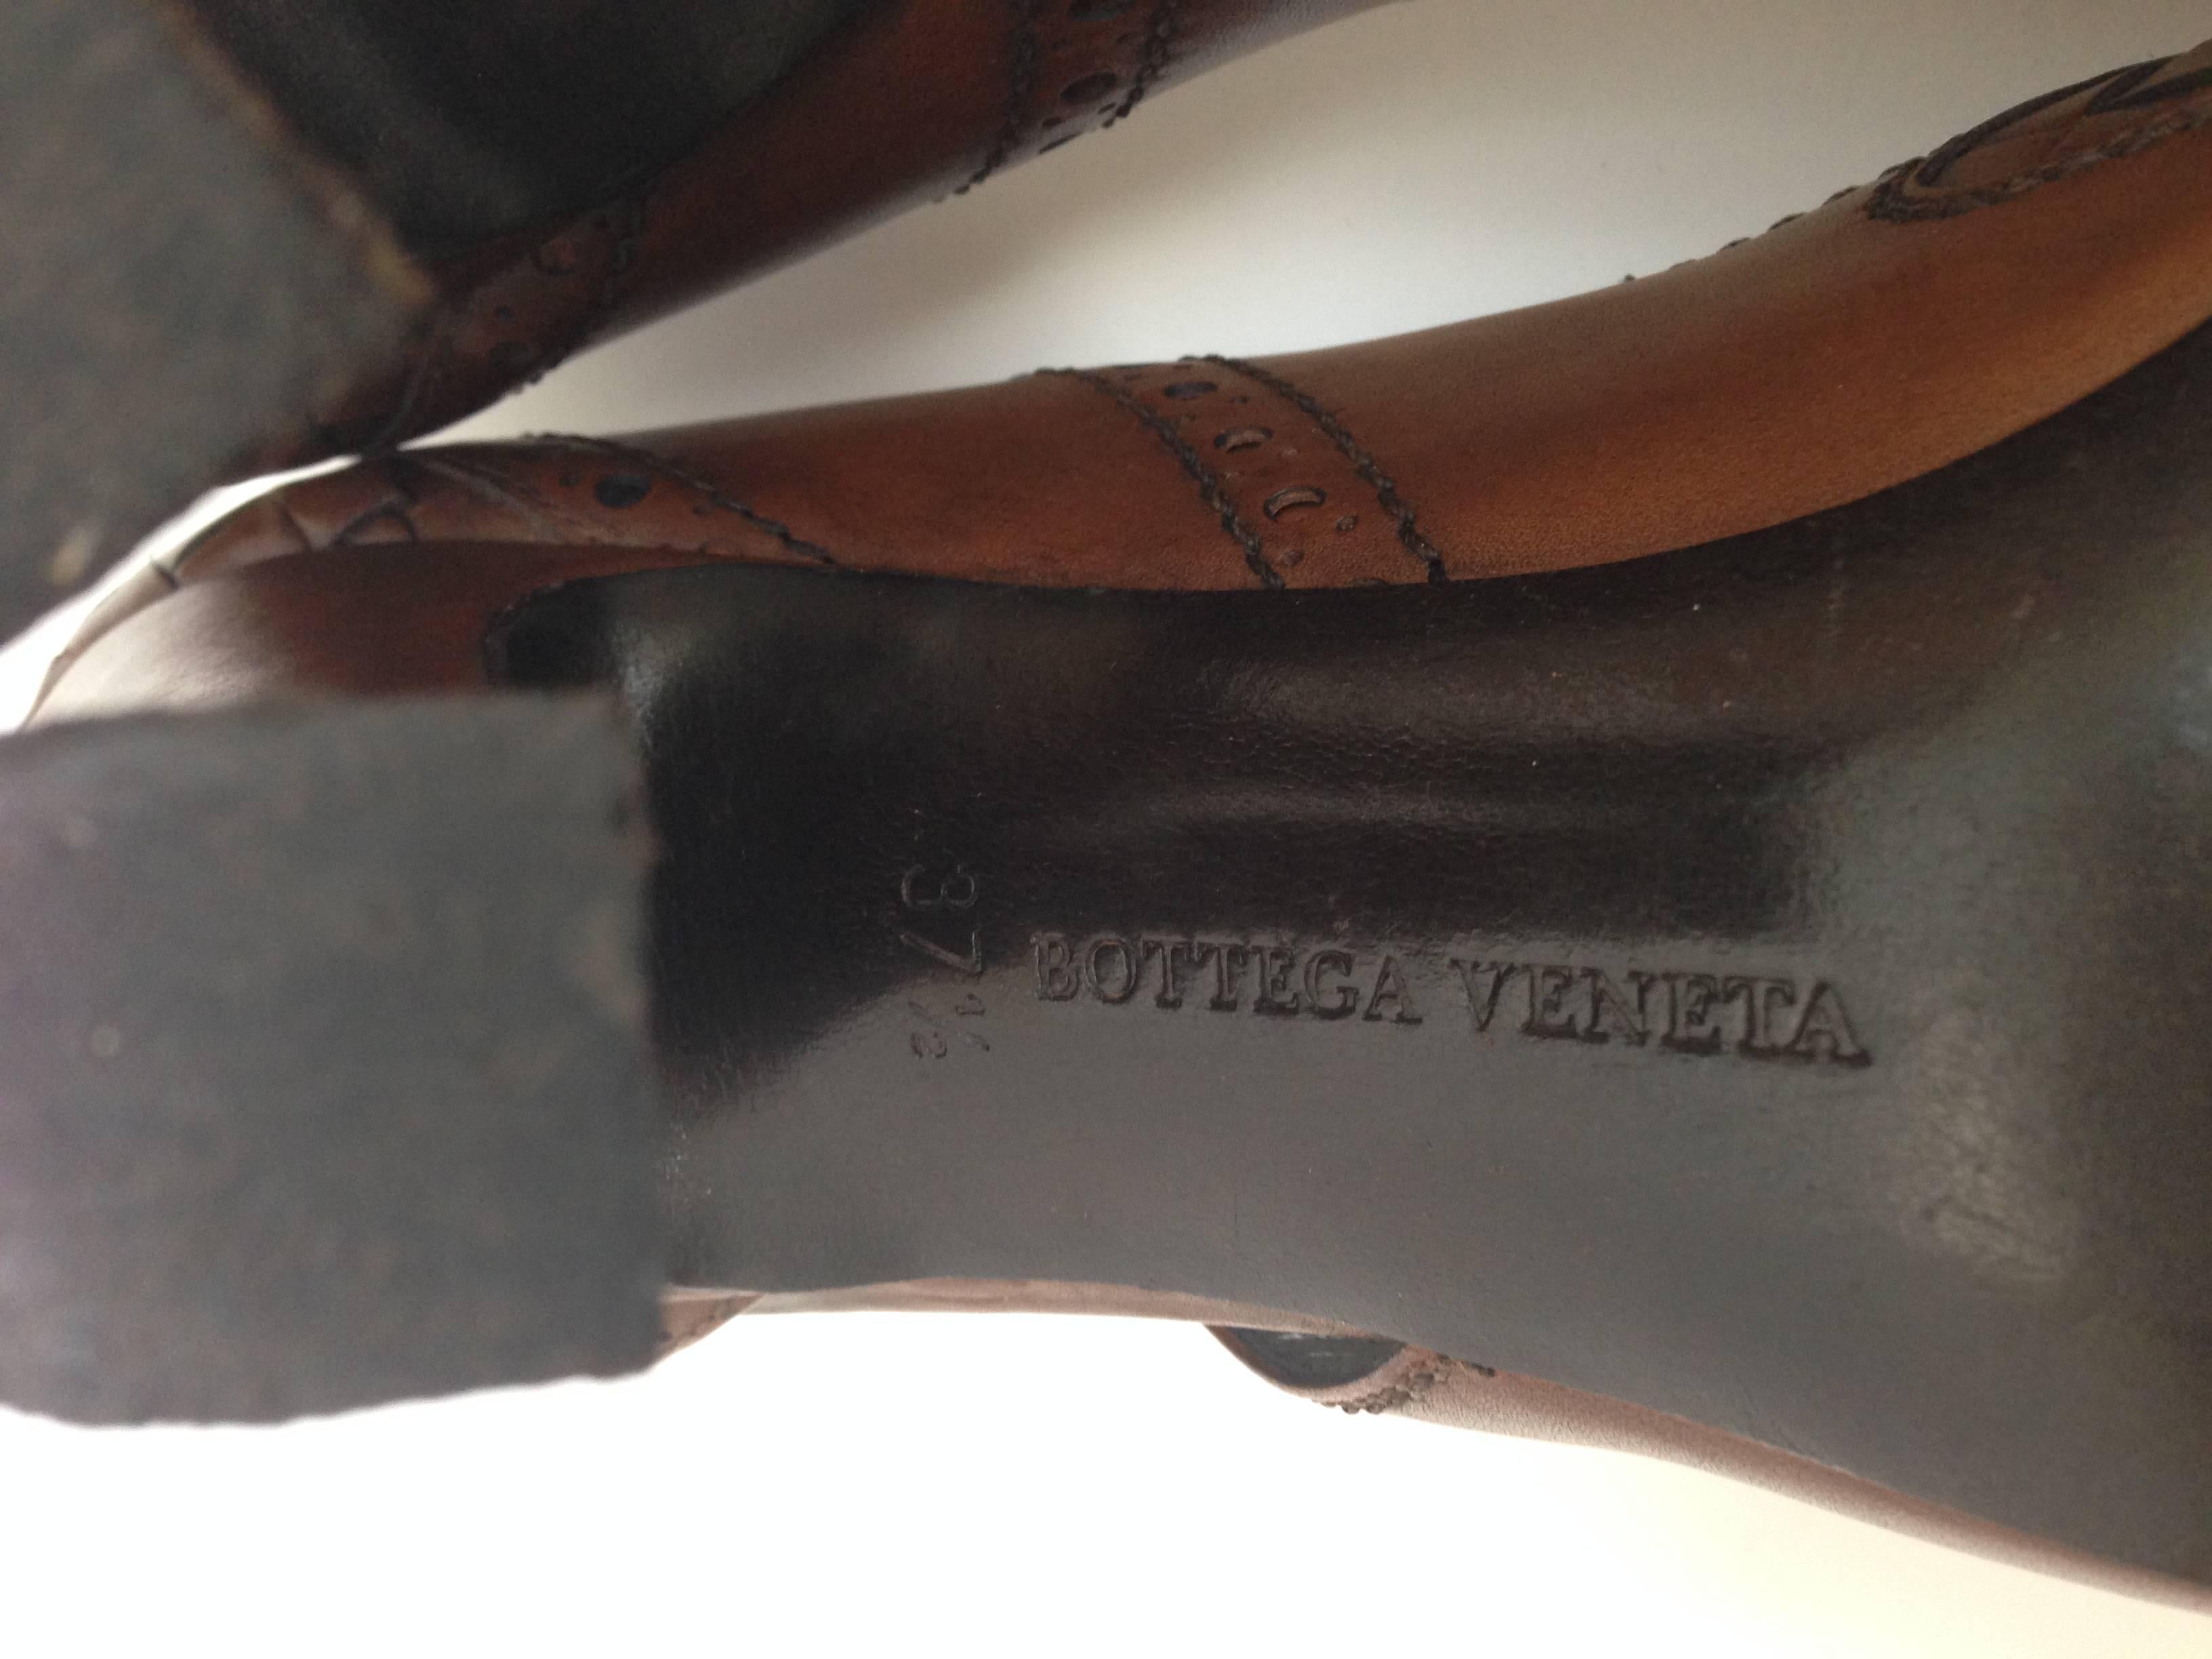 Bottega Veneta Brown Leather Fringe Cutout Pumps Shoes Size 37.5 In Excellent Condition For Sale In Westlake Village, CA